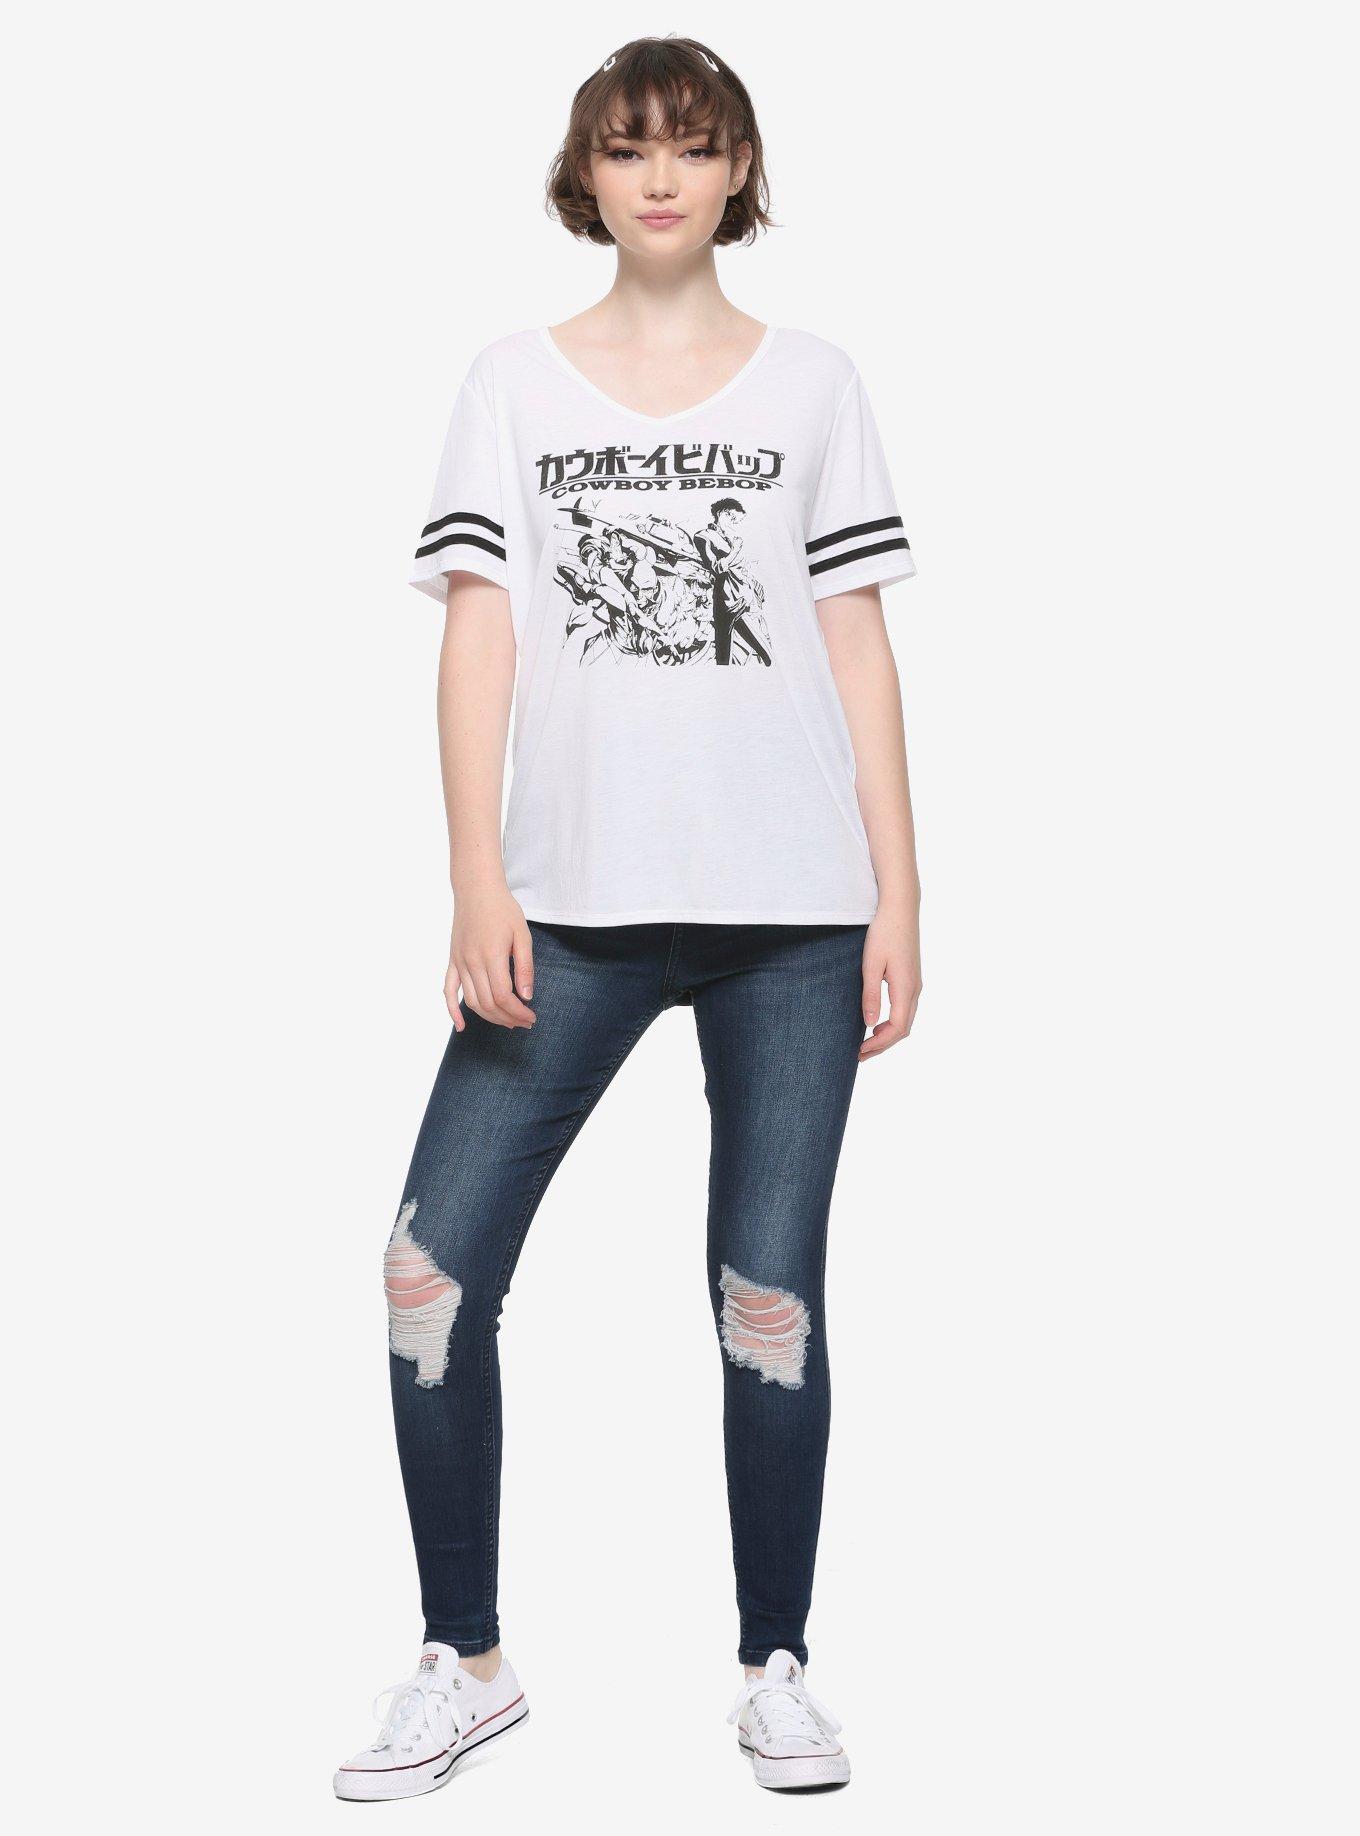 Cowboy Bebob Black & White Girls Athletic T-Shirt, BLACK, alternate